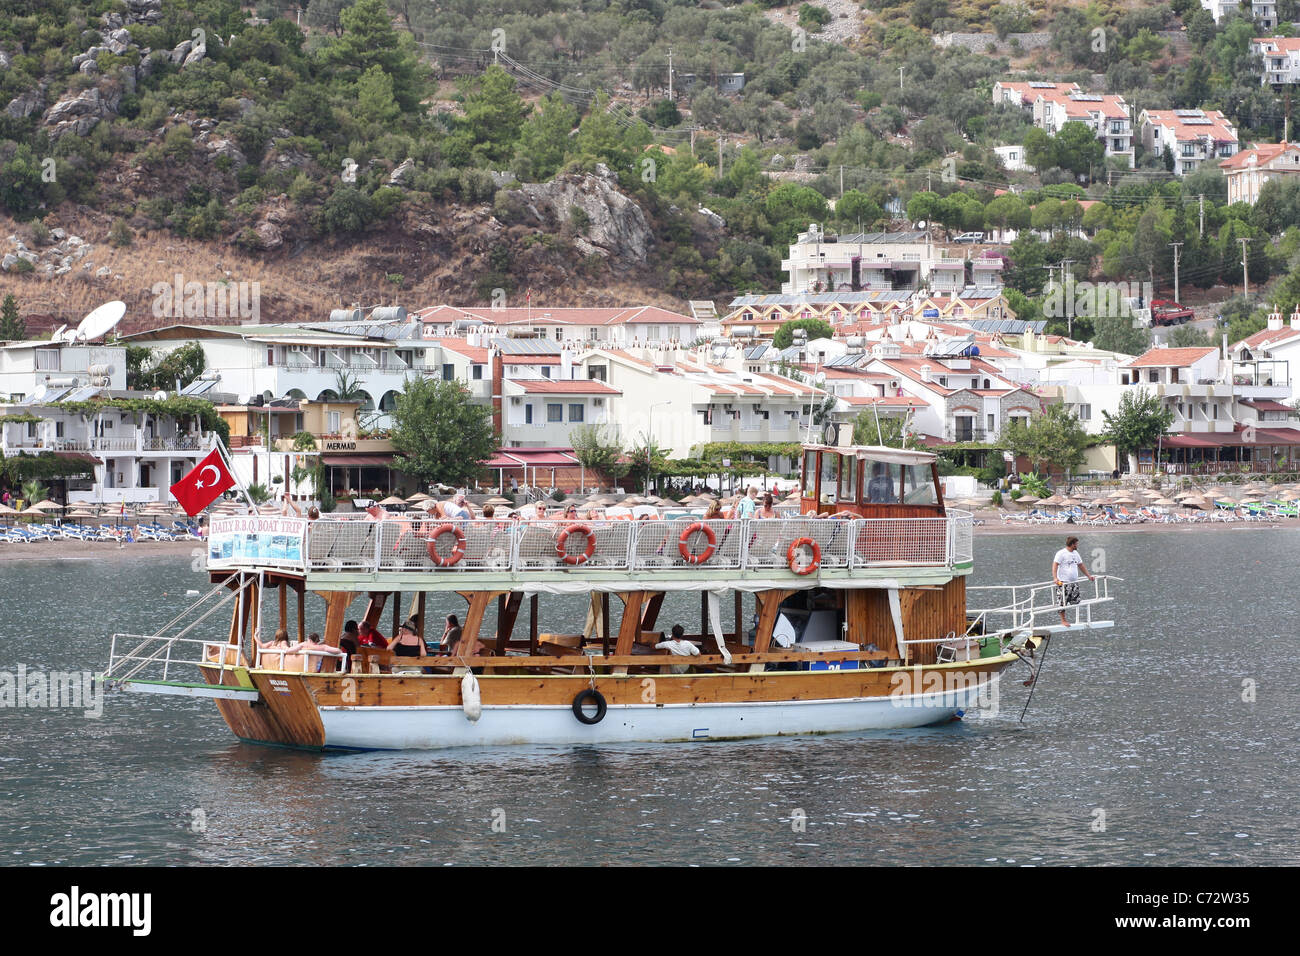 A tourist boat off the shore of Turunc, Turkey Stock Photo